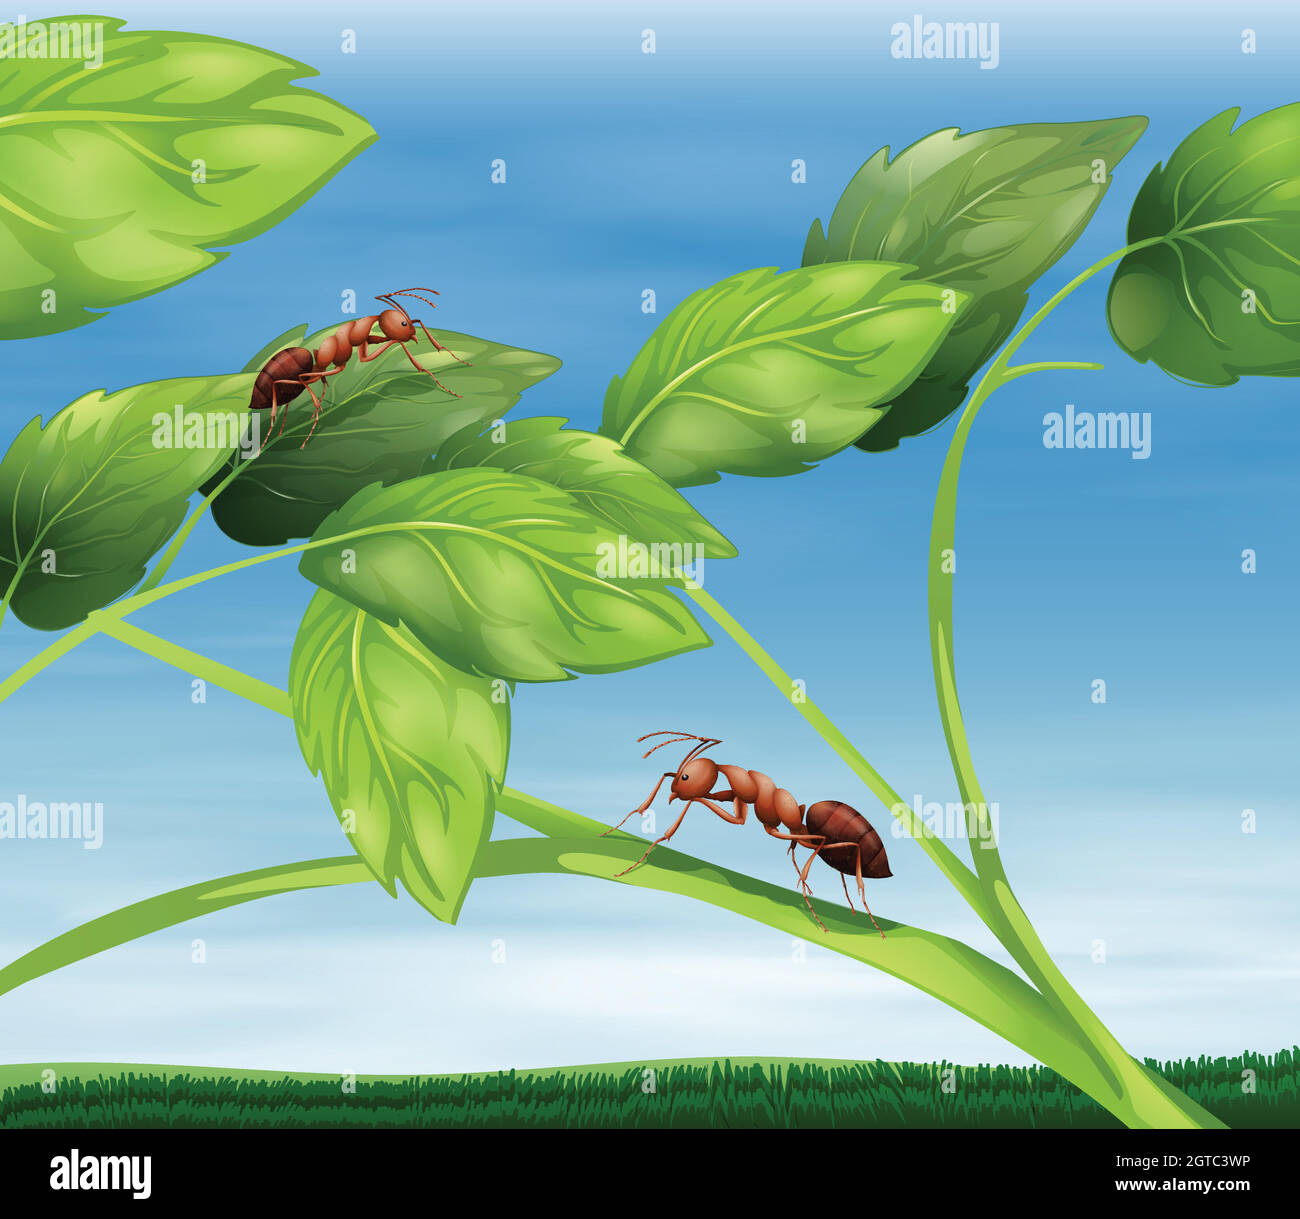 Ants Stock Vector